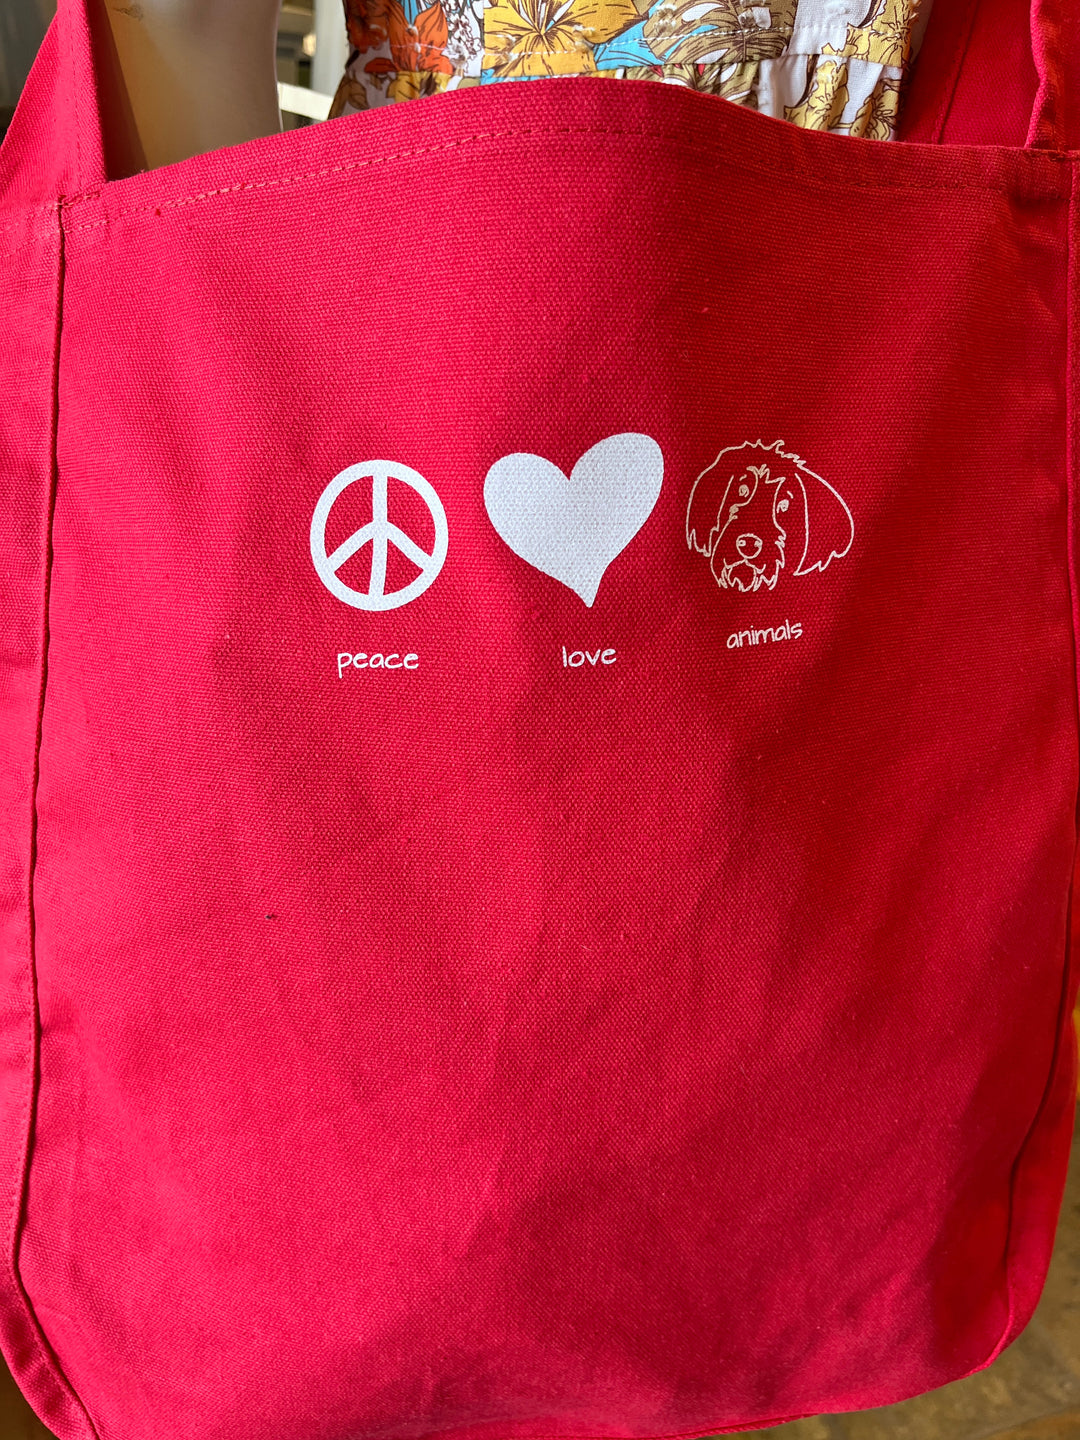 NEW Design! Peace Love Animals Tote Bag